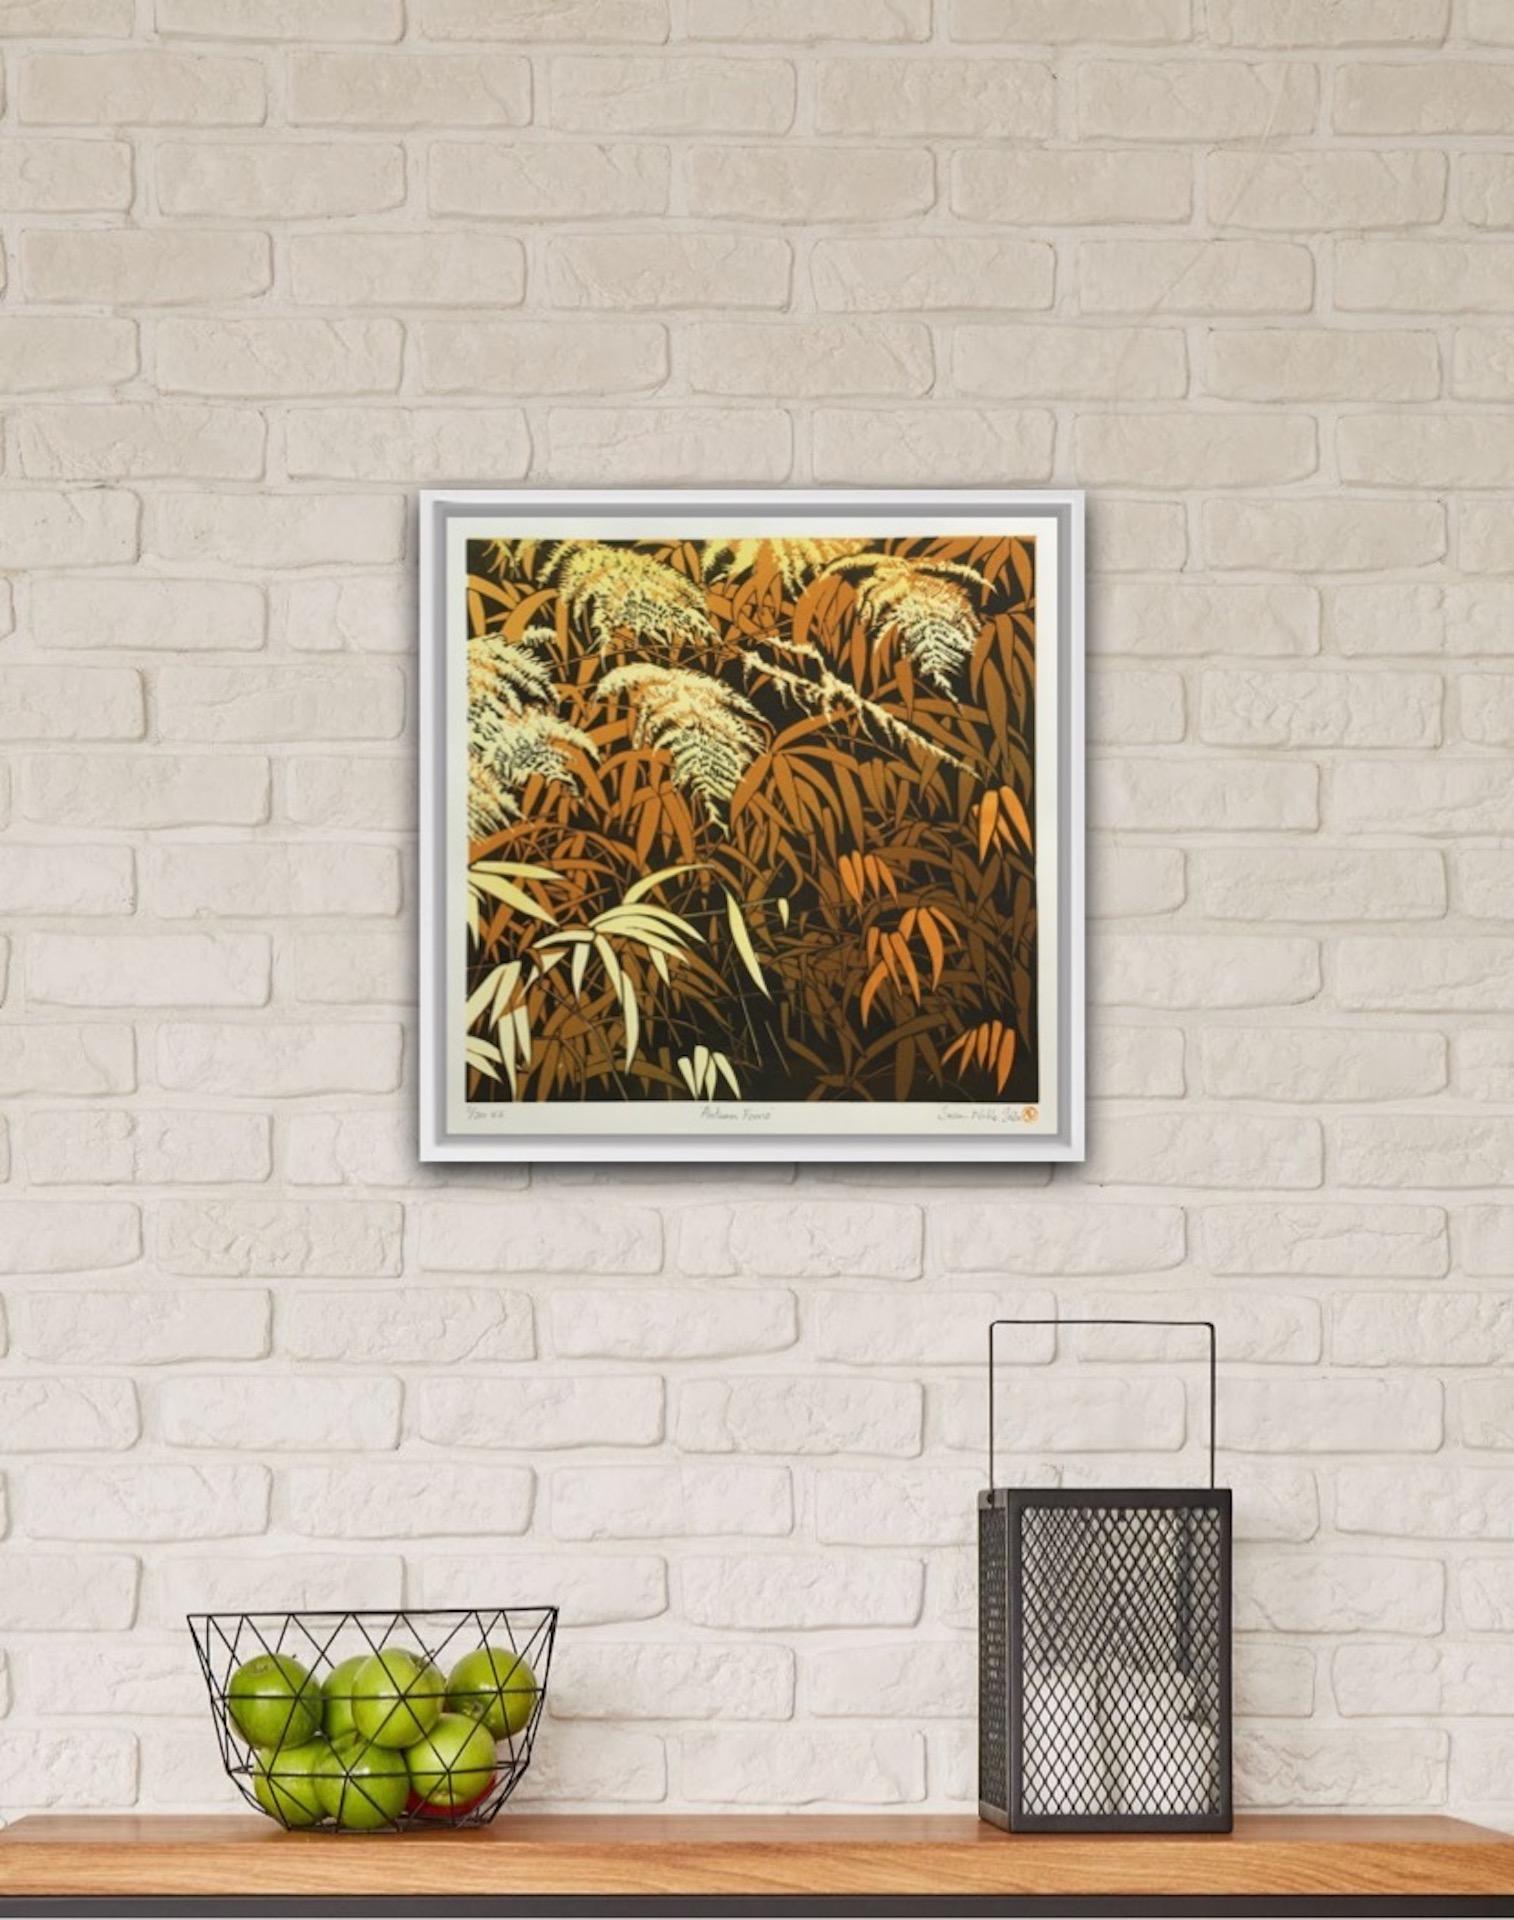 Susan Noble, Autumn Ferns, Limited Edition Print, Affordable Art, Nature Art 4